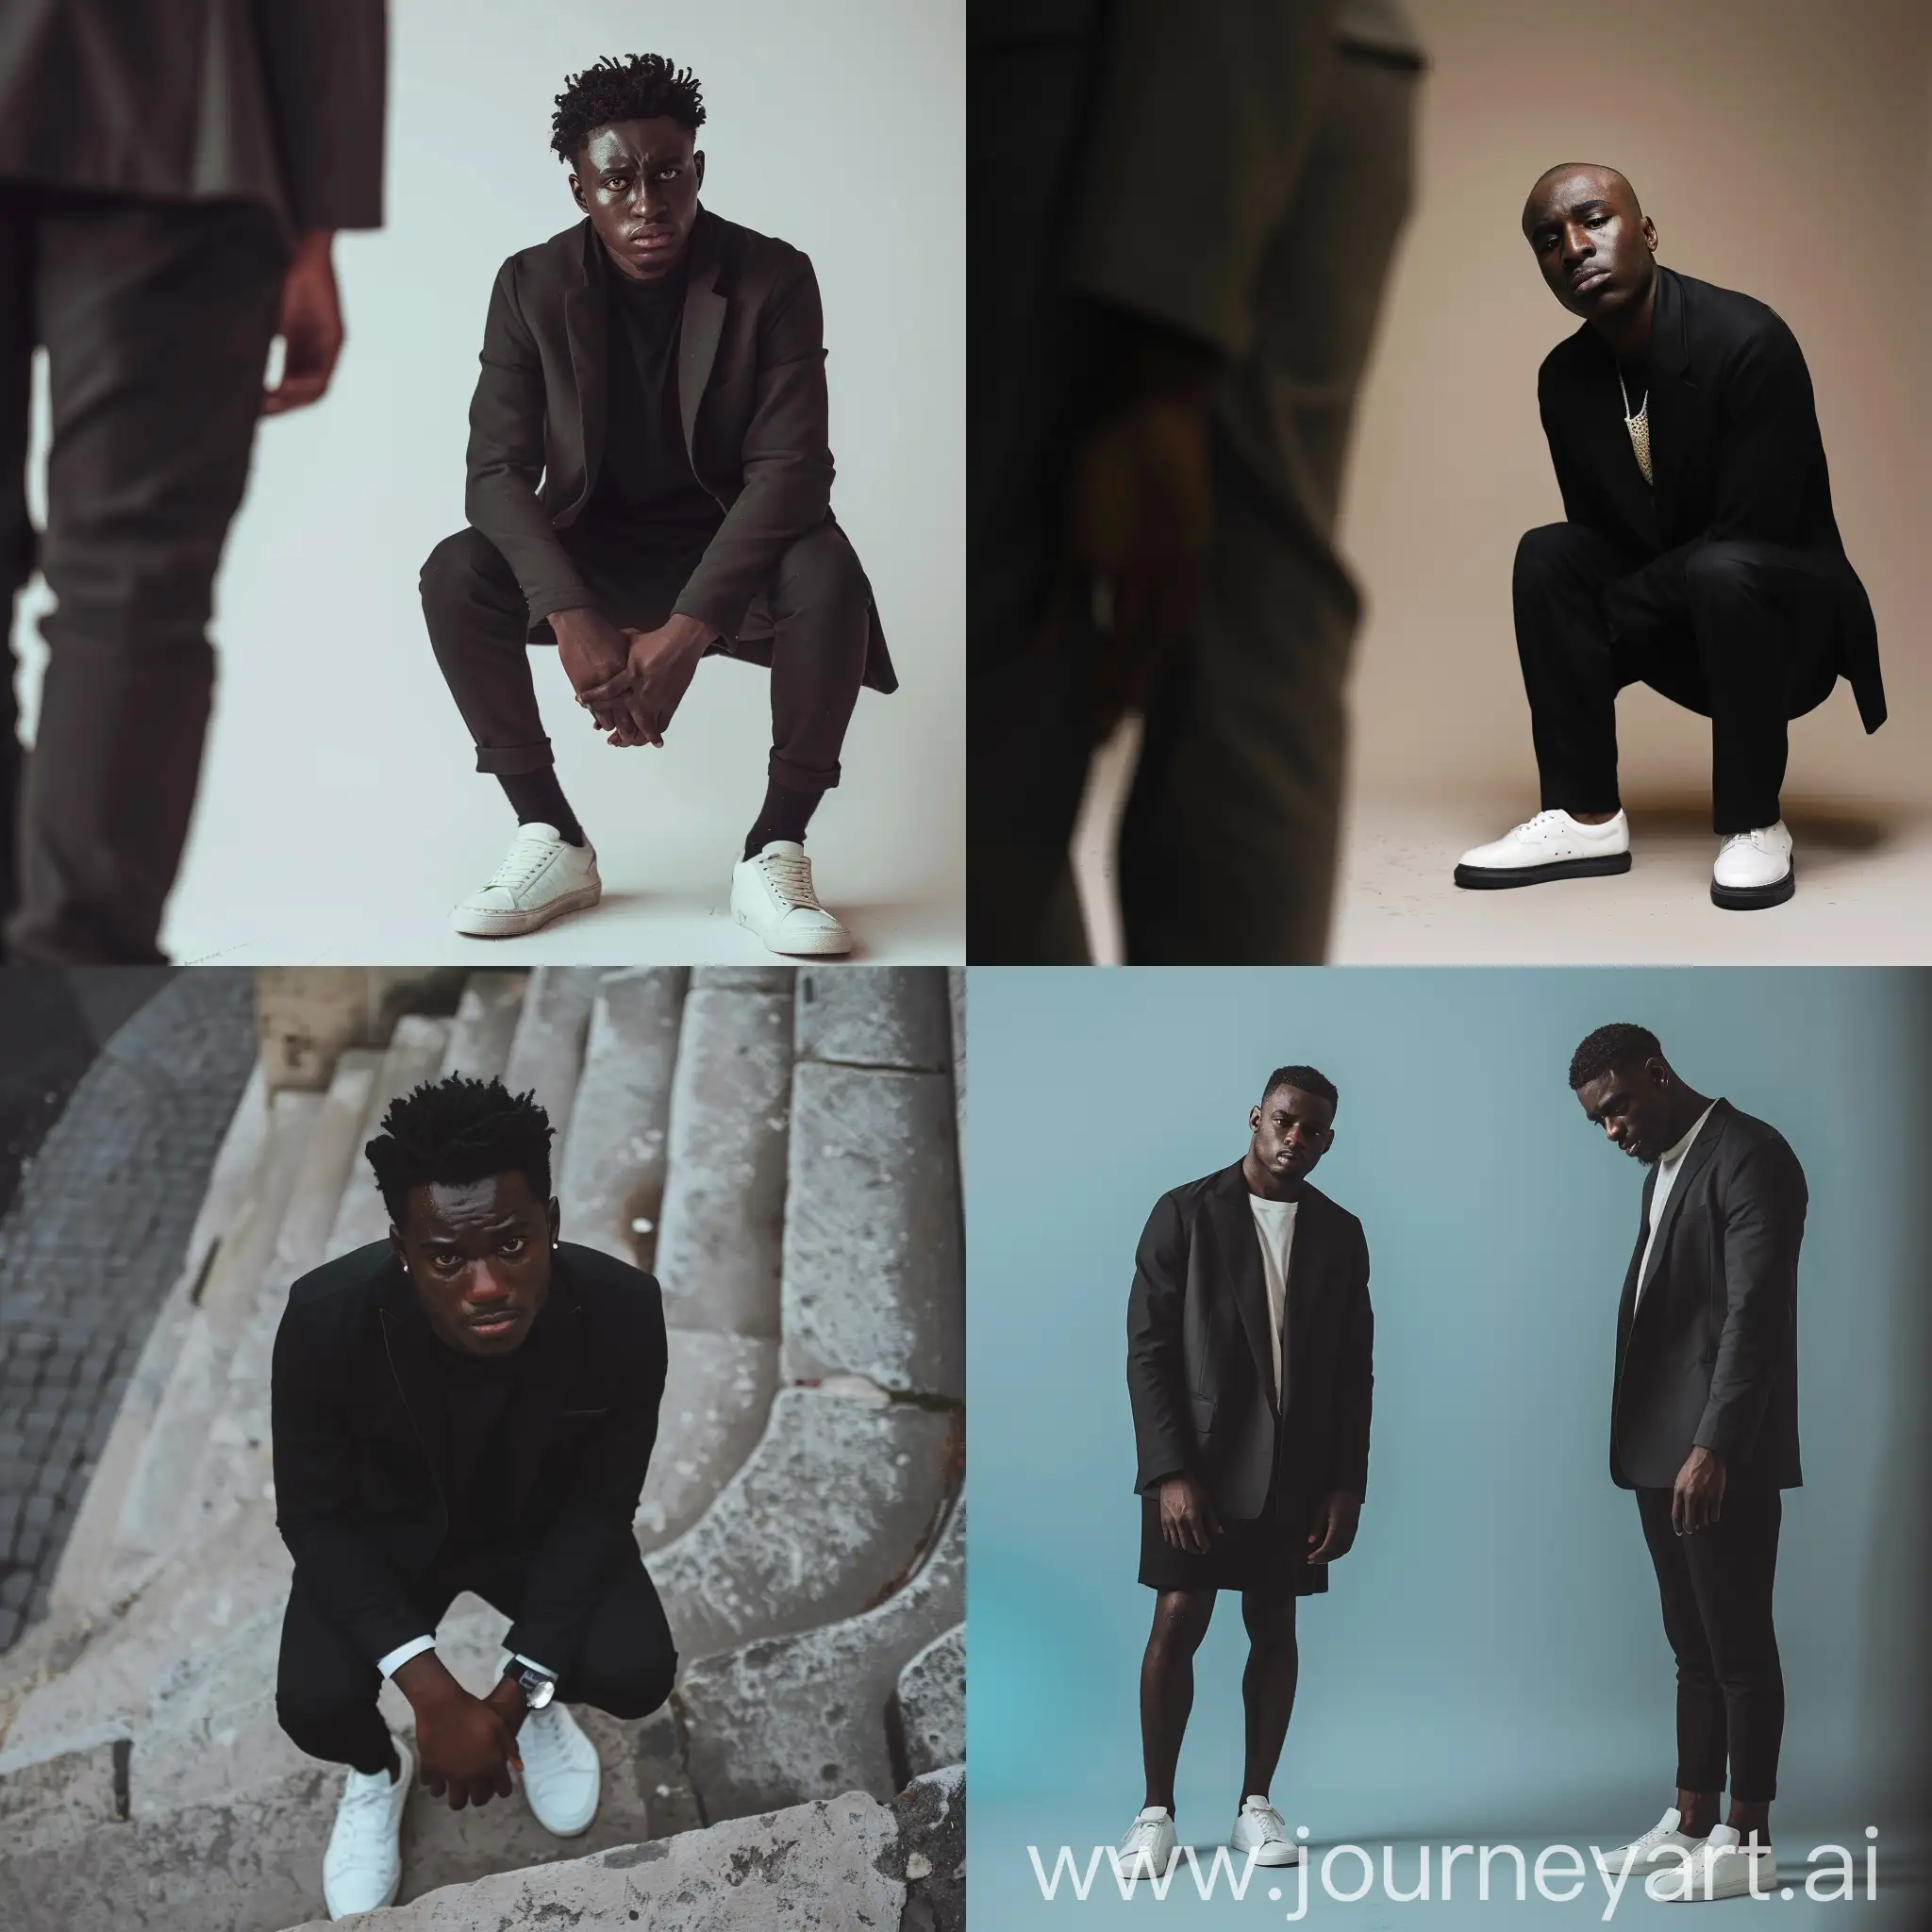 Stylish-Black-Man-in-Contemplative-Pose-Intimate-Portrait-Photography